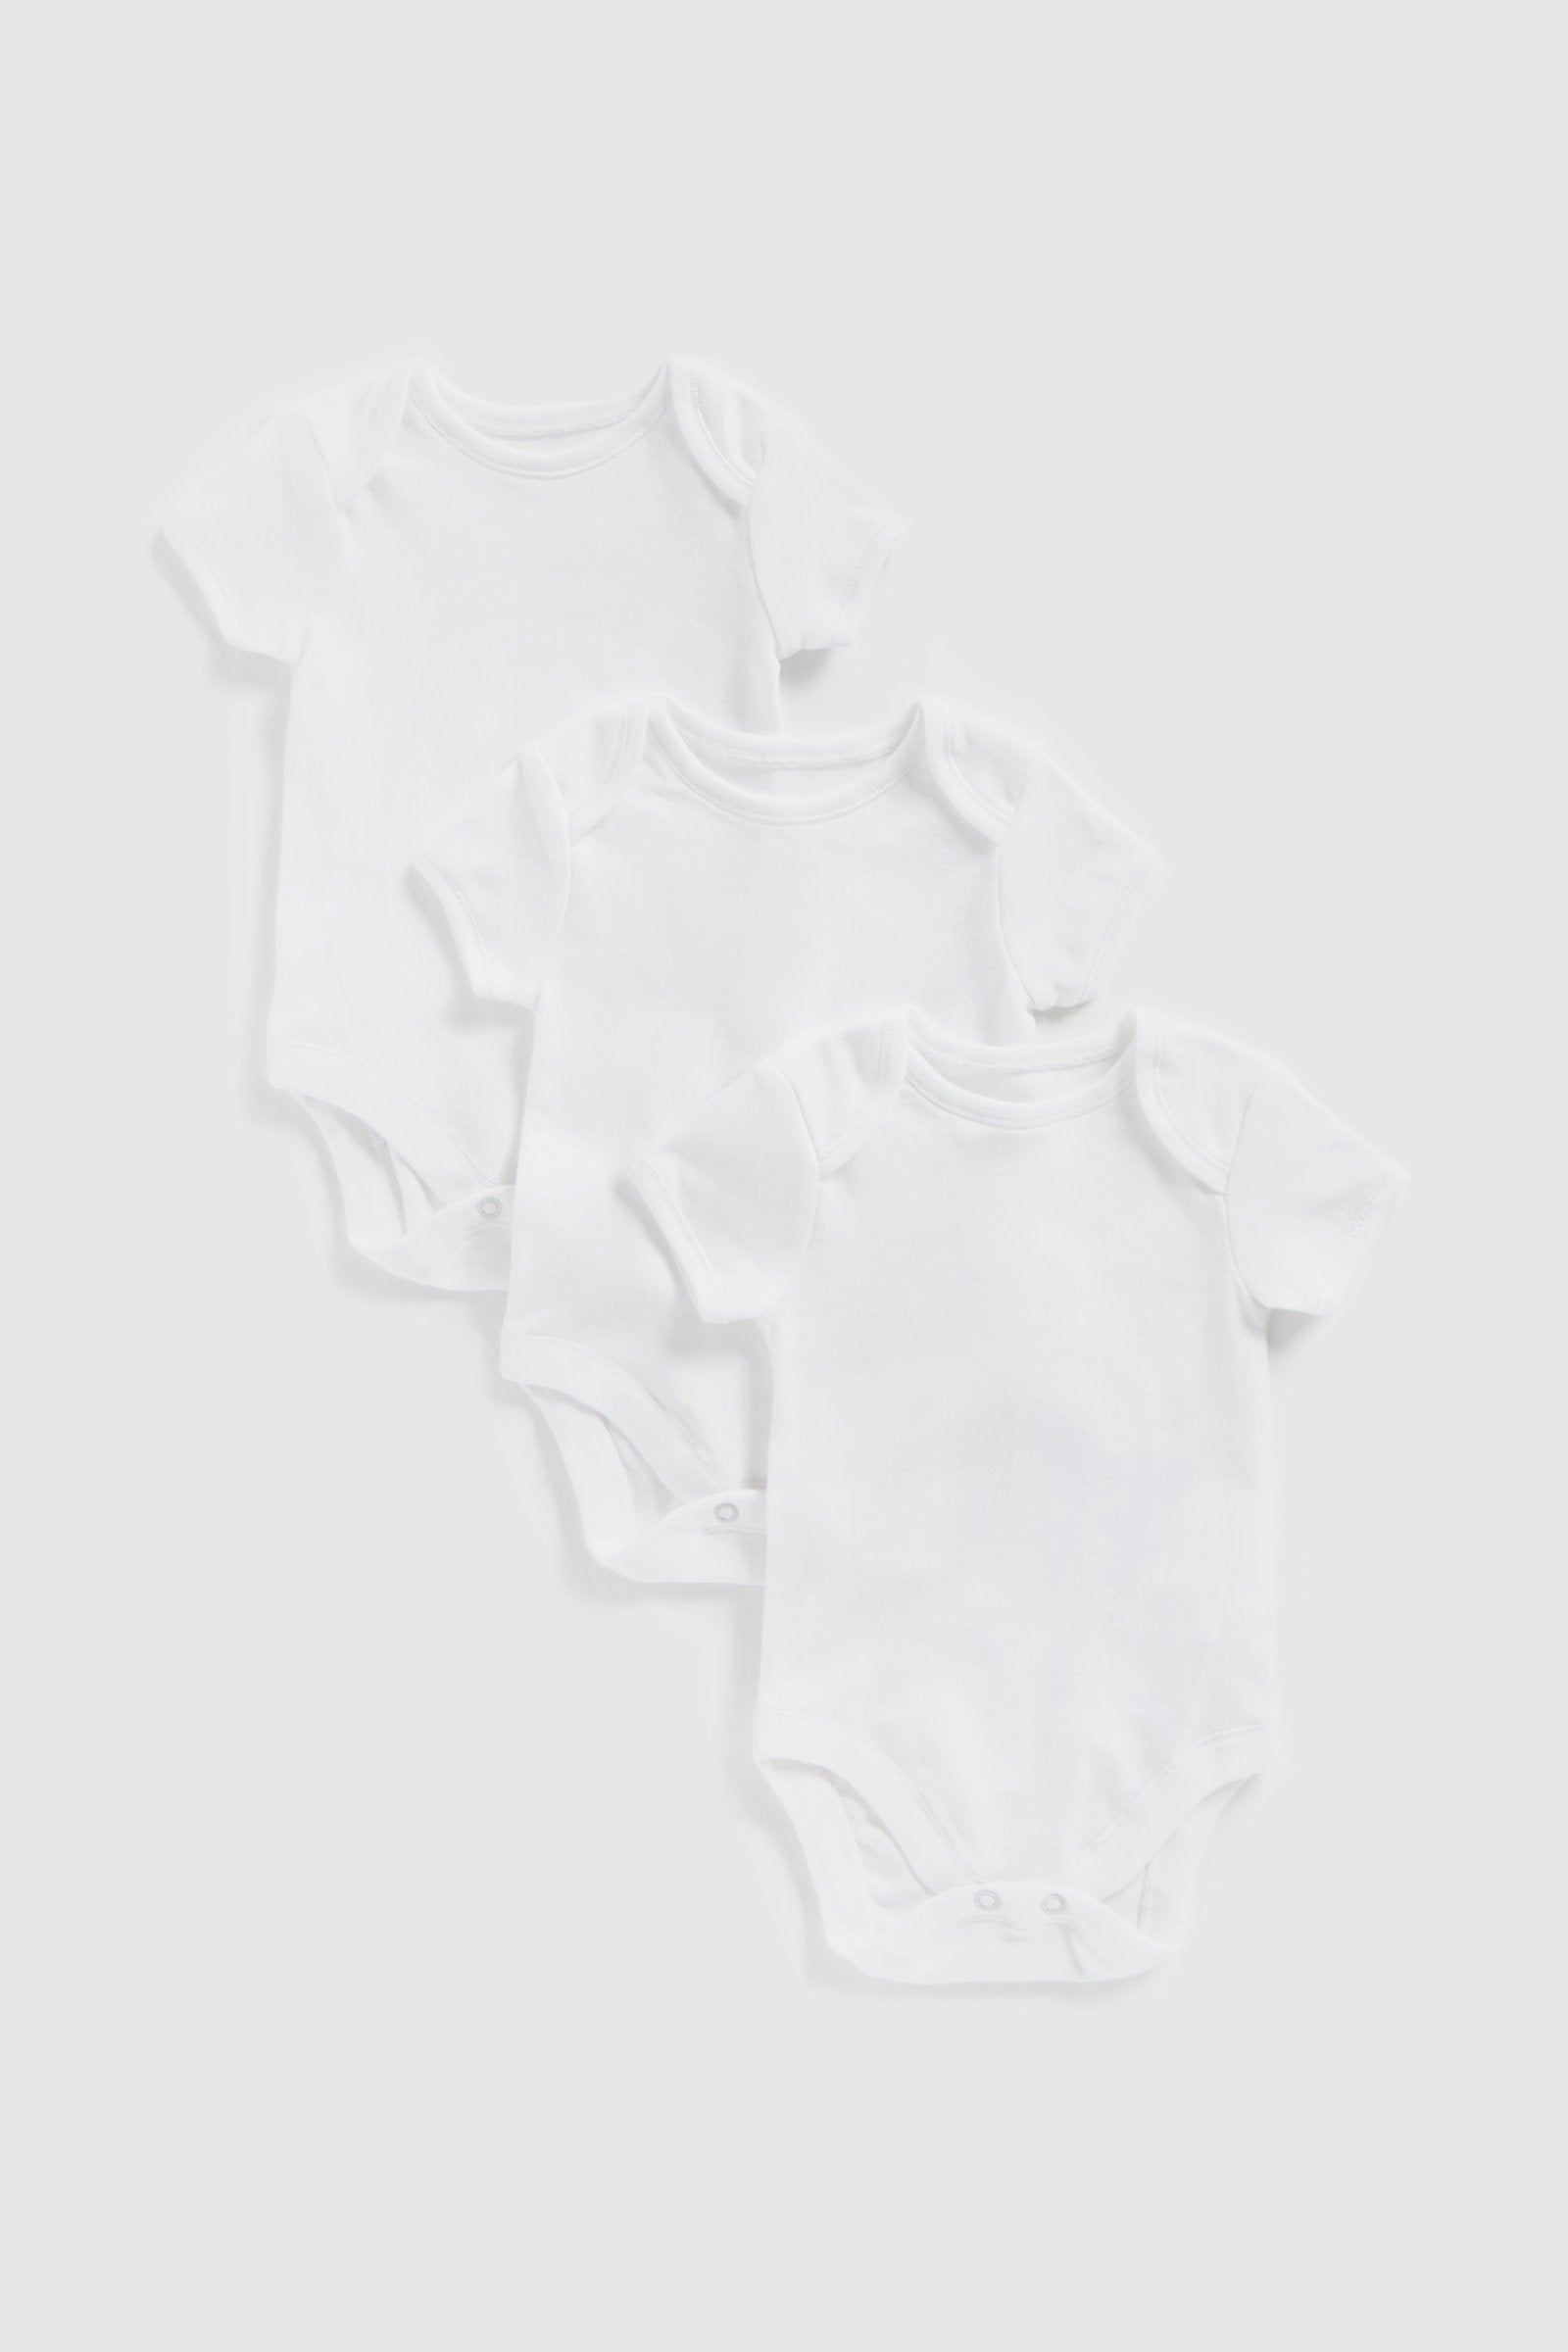 Mothercare White Short-Sleeved Bodysuits - 3 Pack